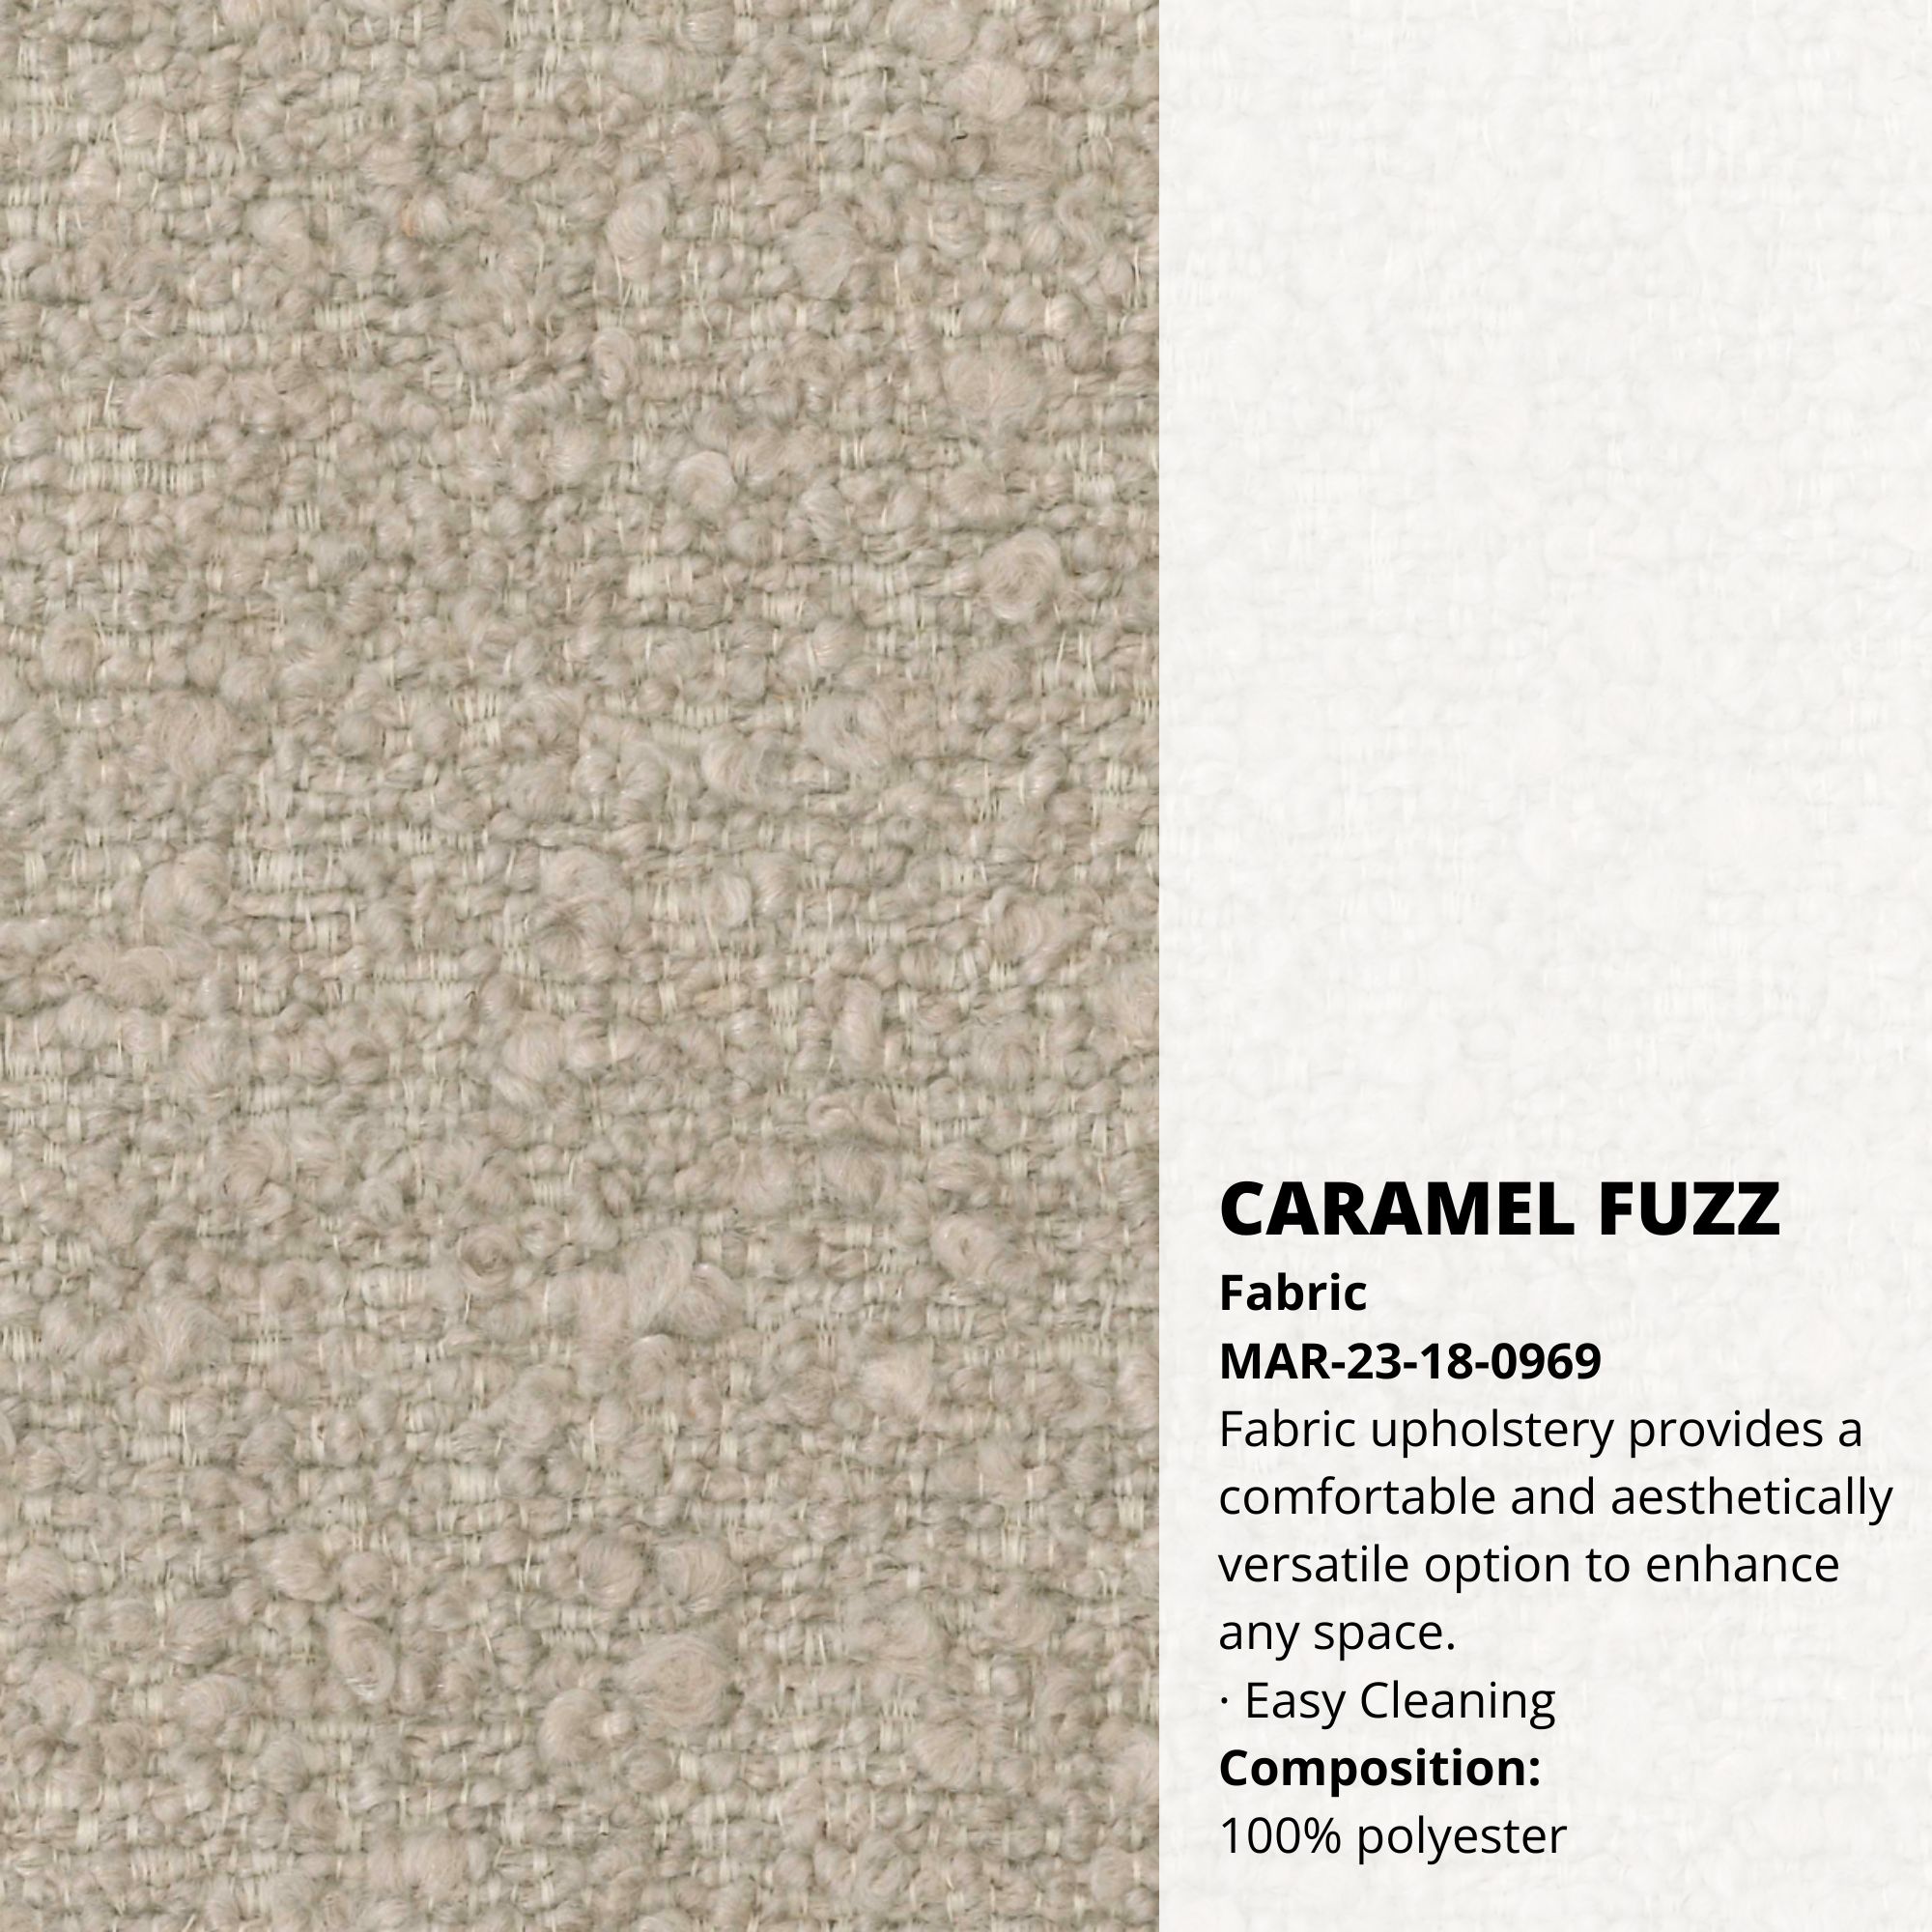 Caramel Fuzz